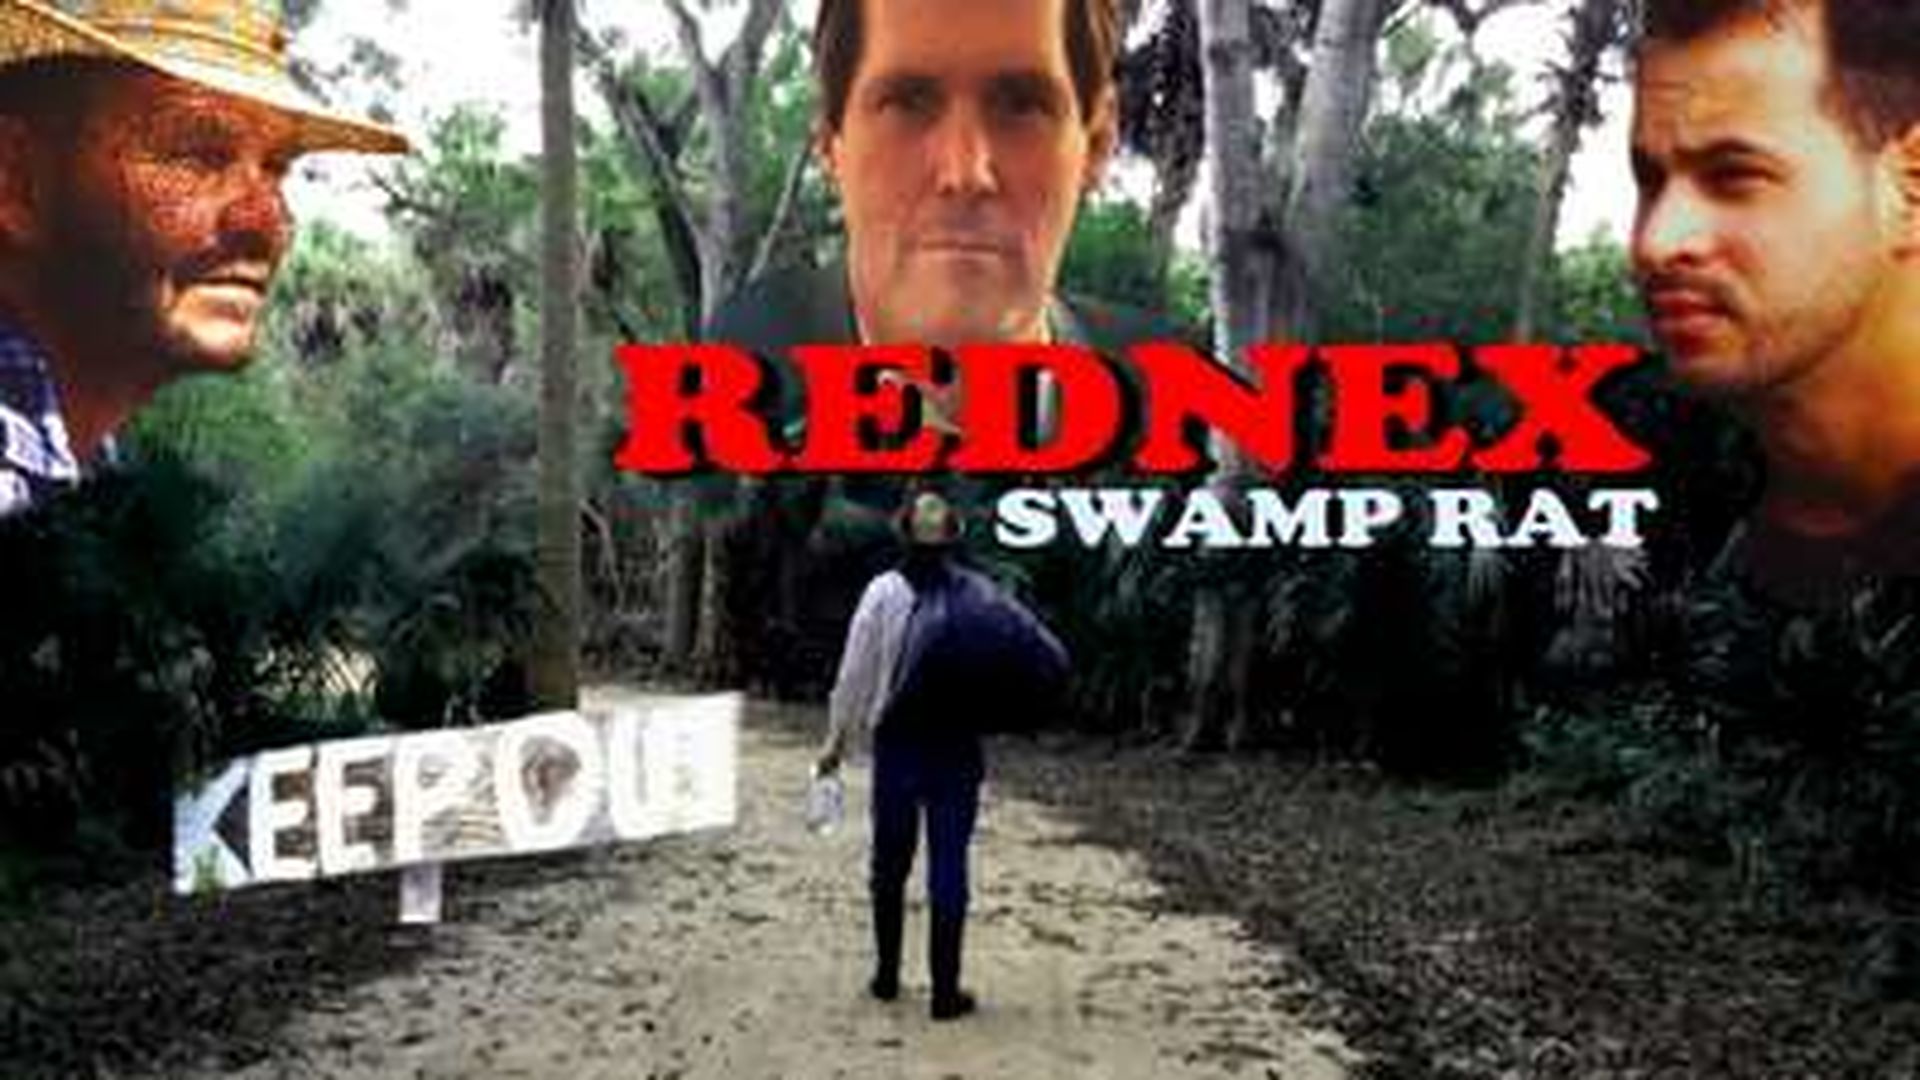 REDNEX-SWAMP RAT